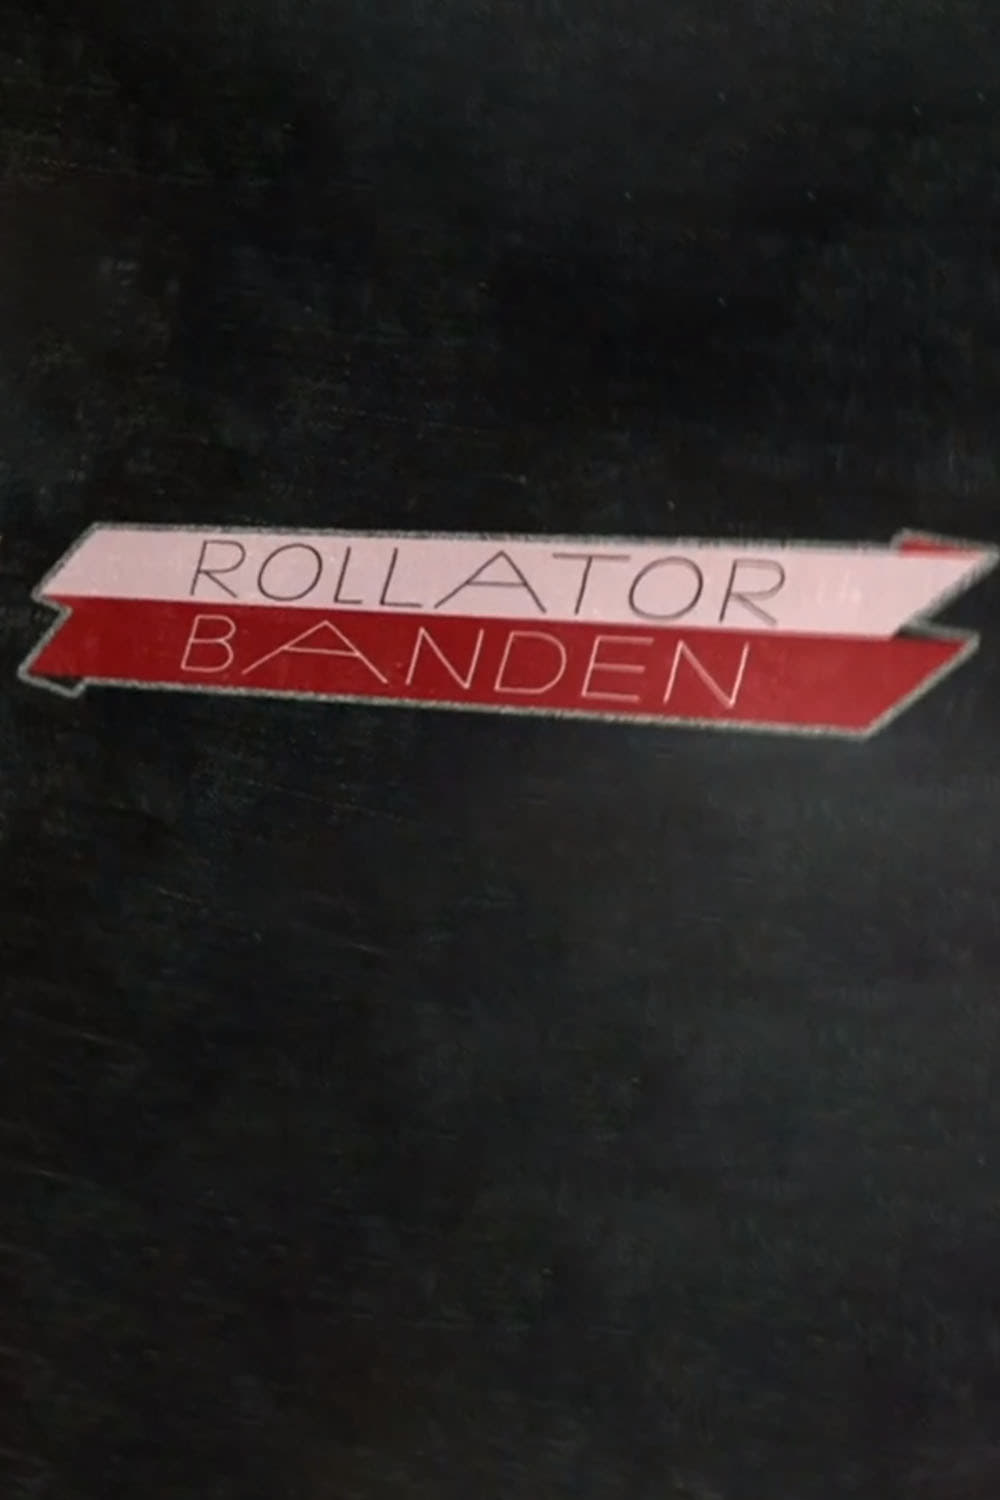 Rollator Banden